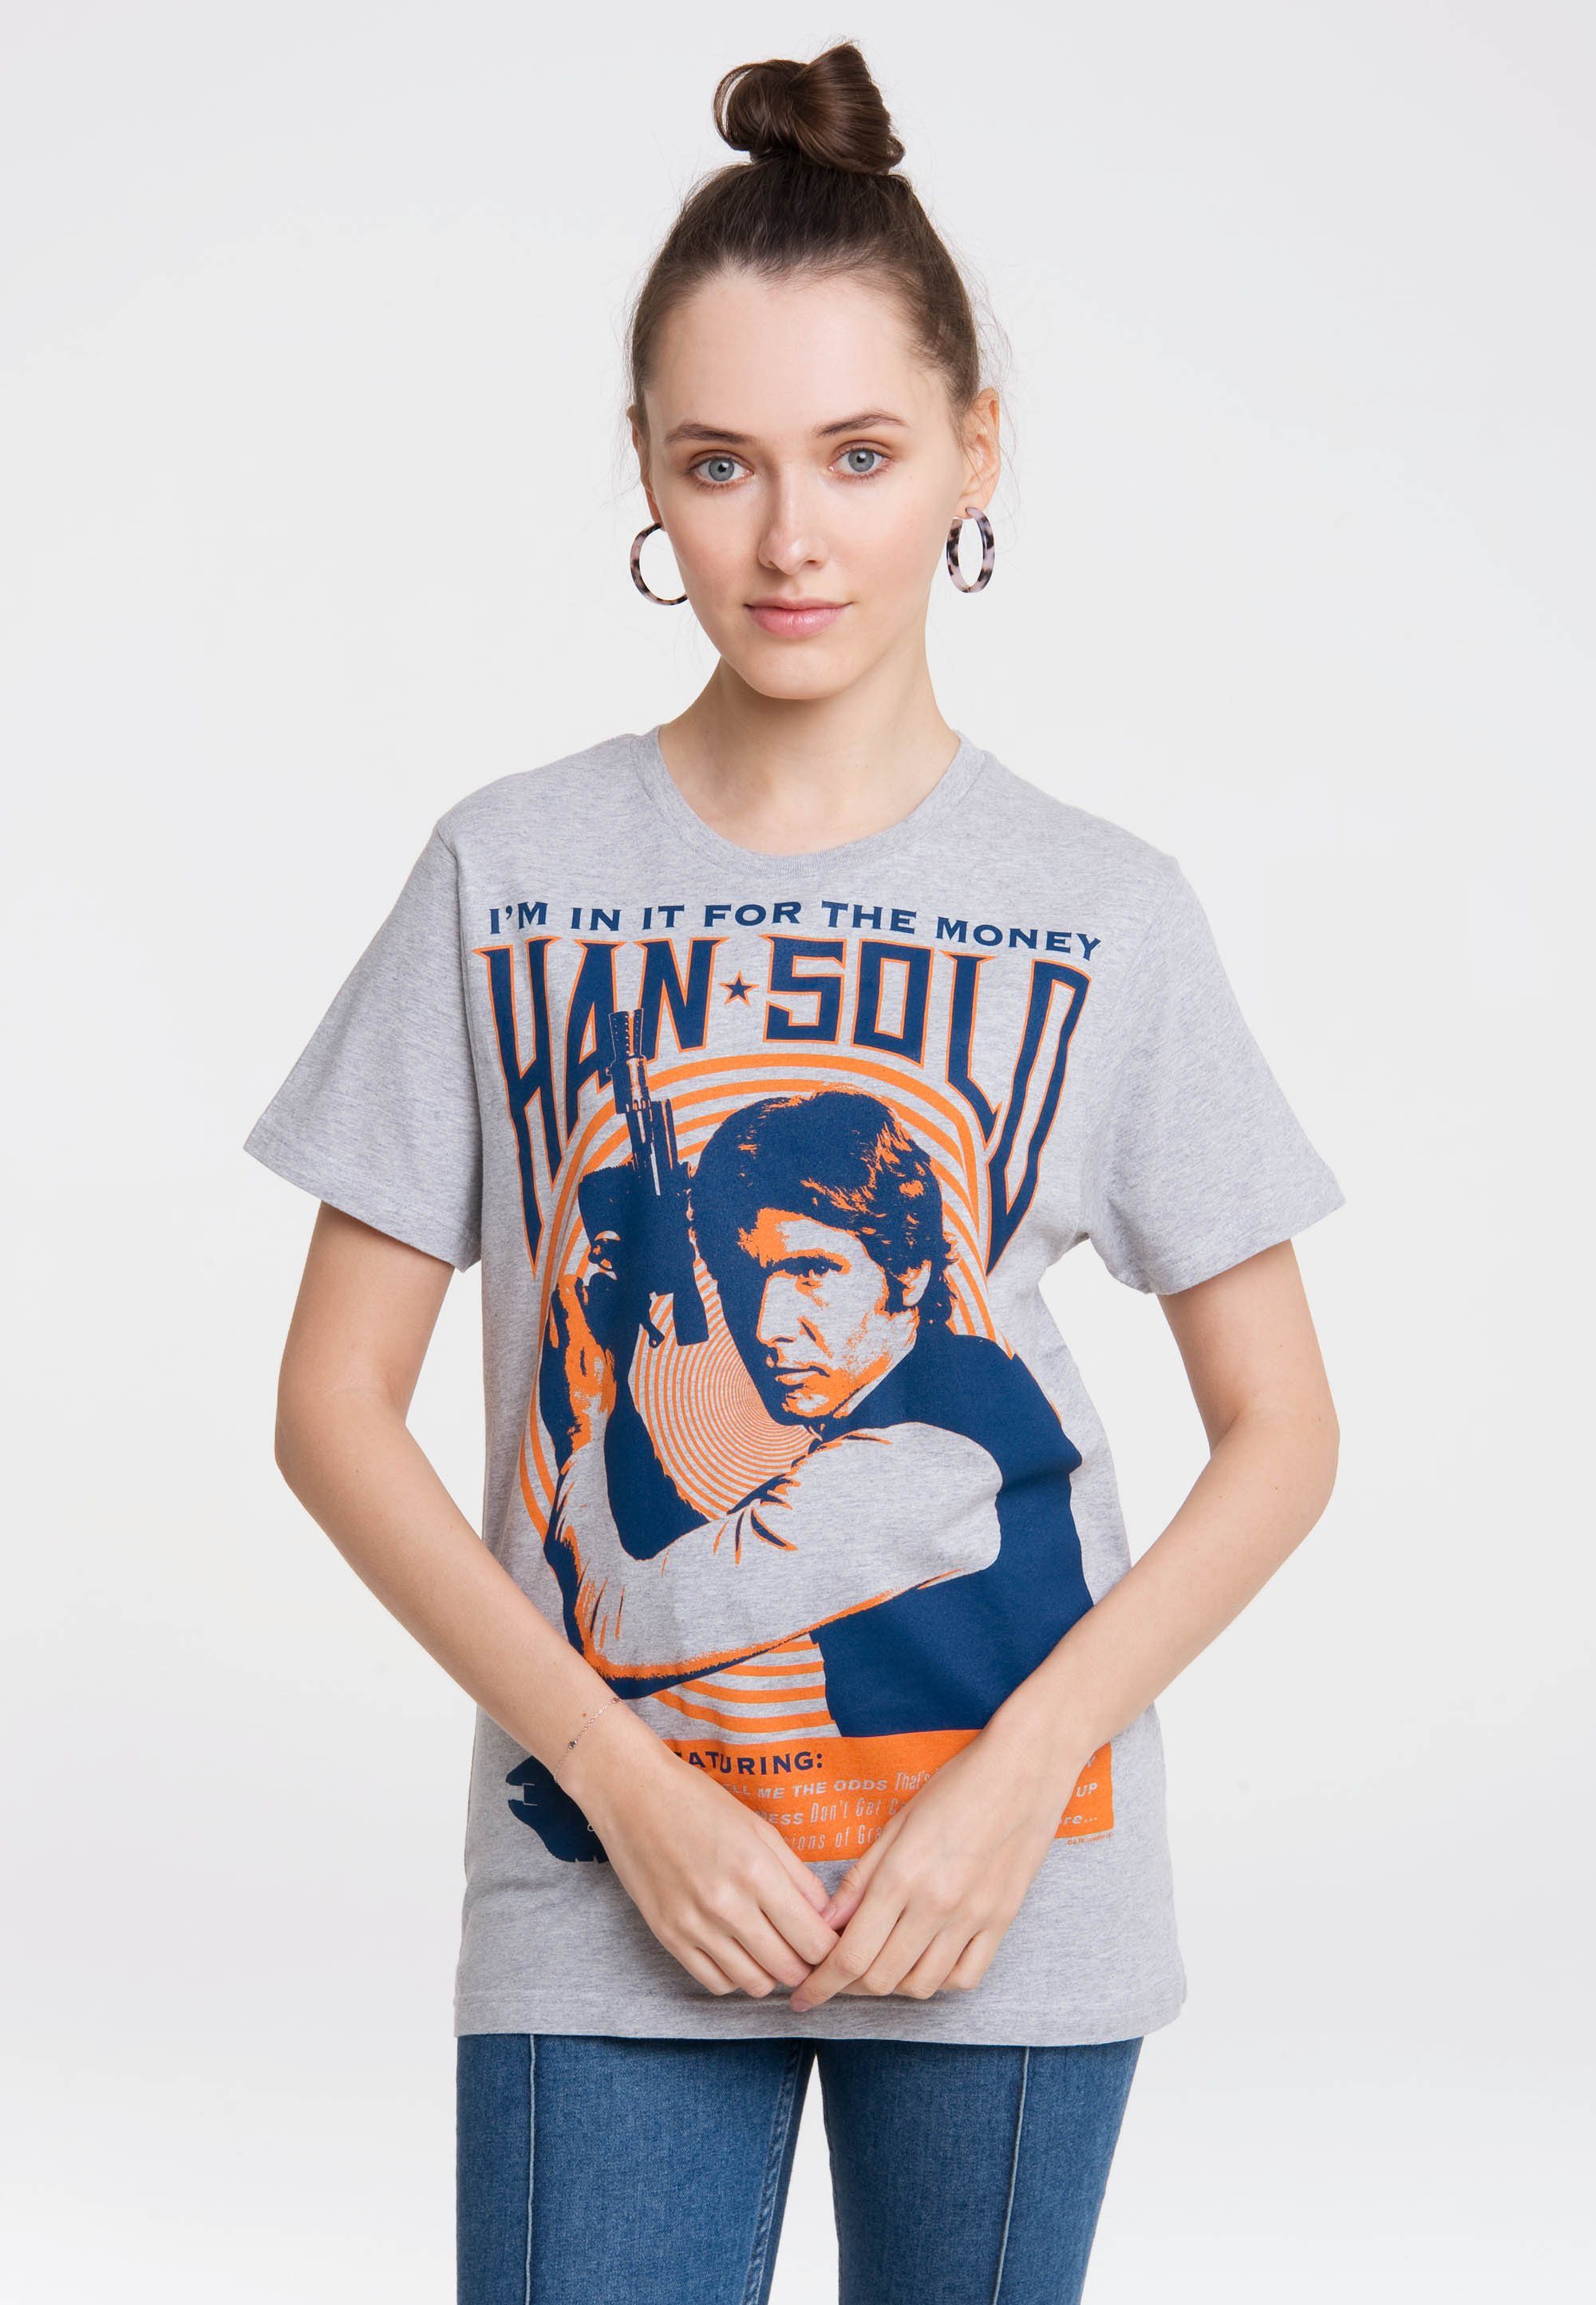 LOGOSHIRT T-Shirt Star Wars - Han Solo - Money mit Han Solo-Print